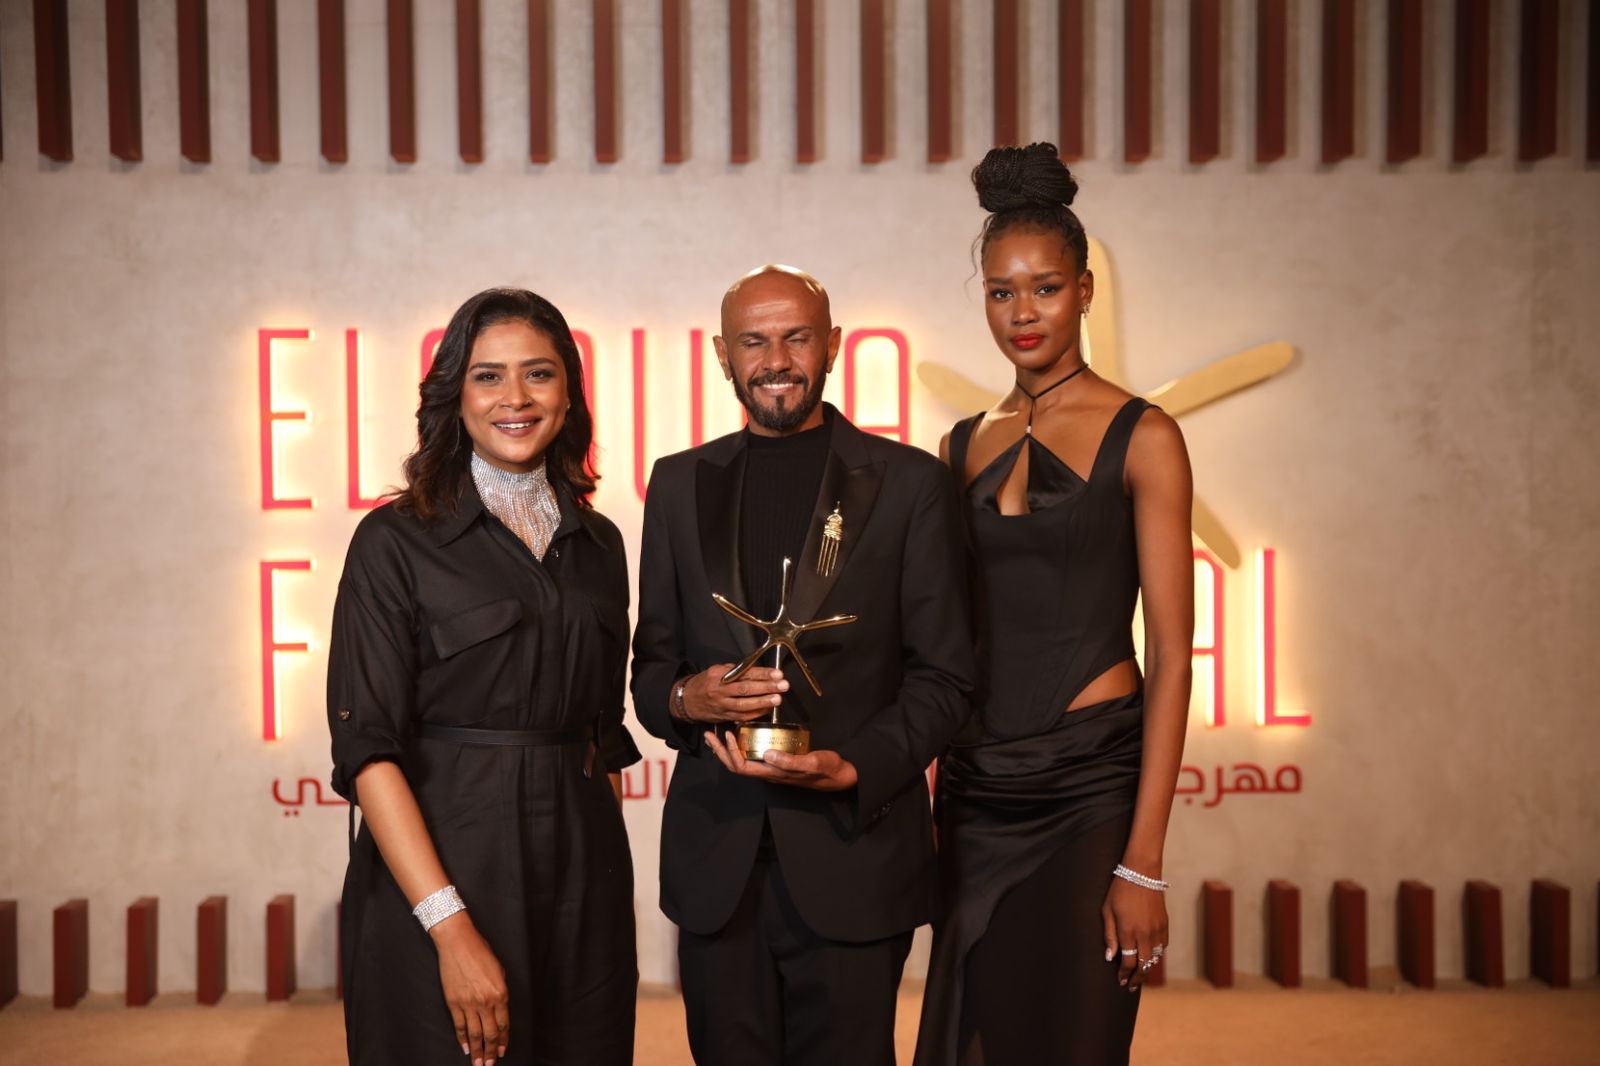 GOODBYE JULIA wins Cinema for Humanity Award at El Gouna Festival, Kordofani and Abu Alala praise impactful win